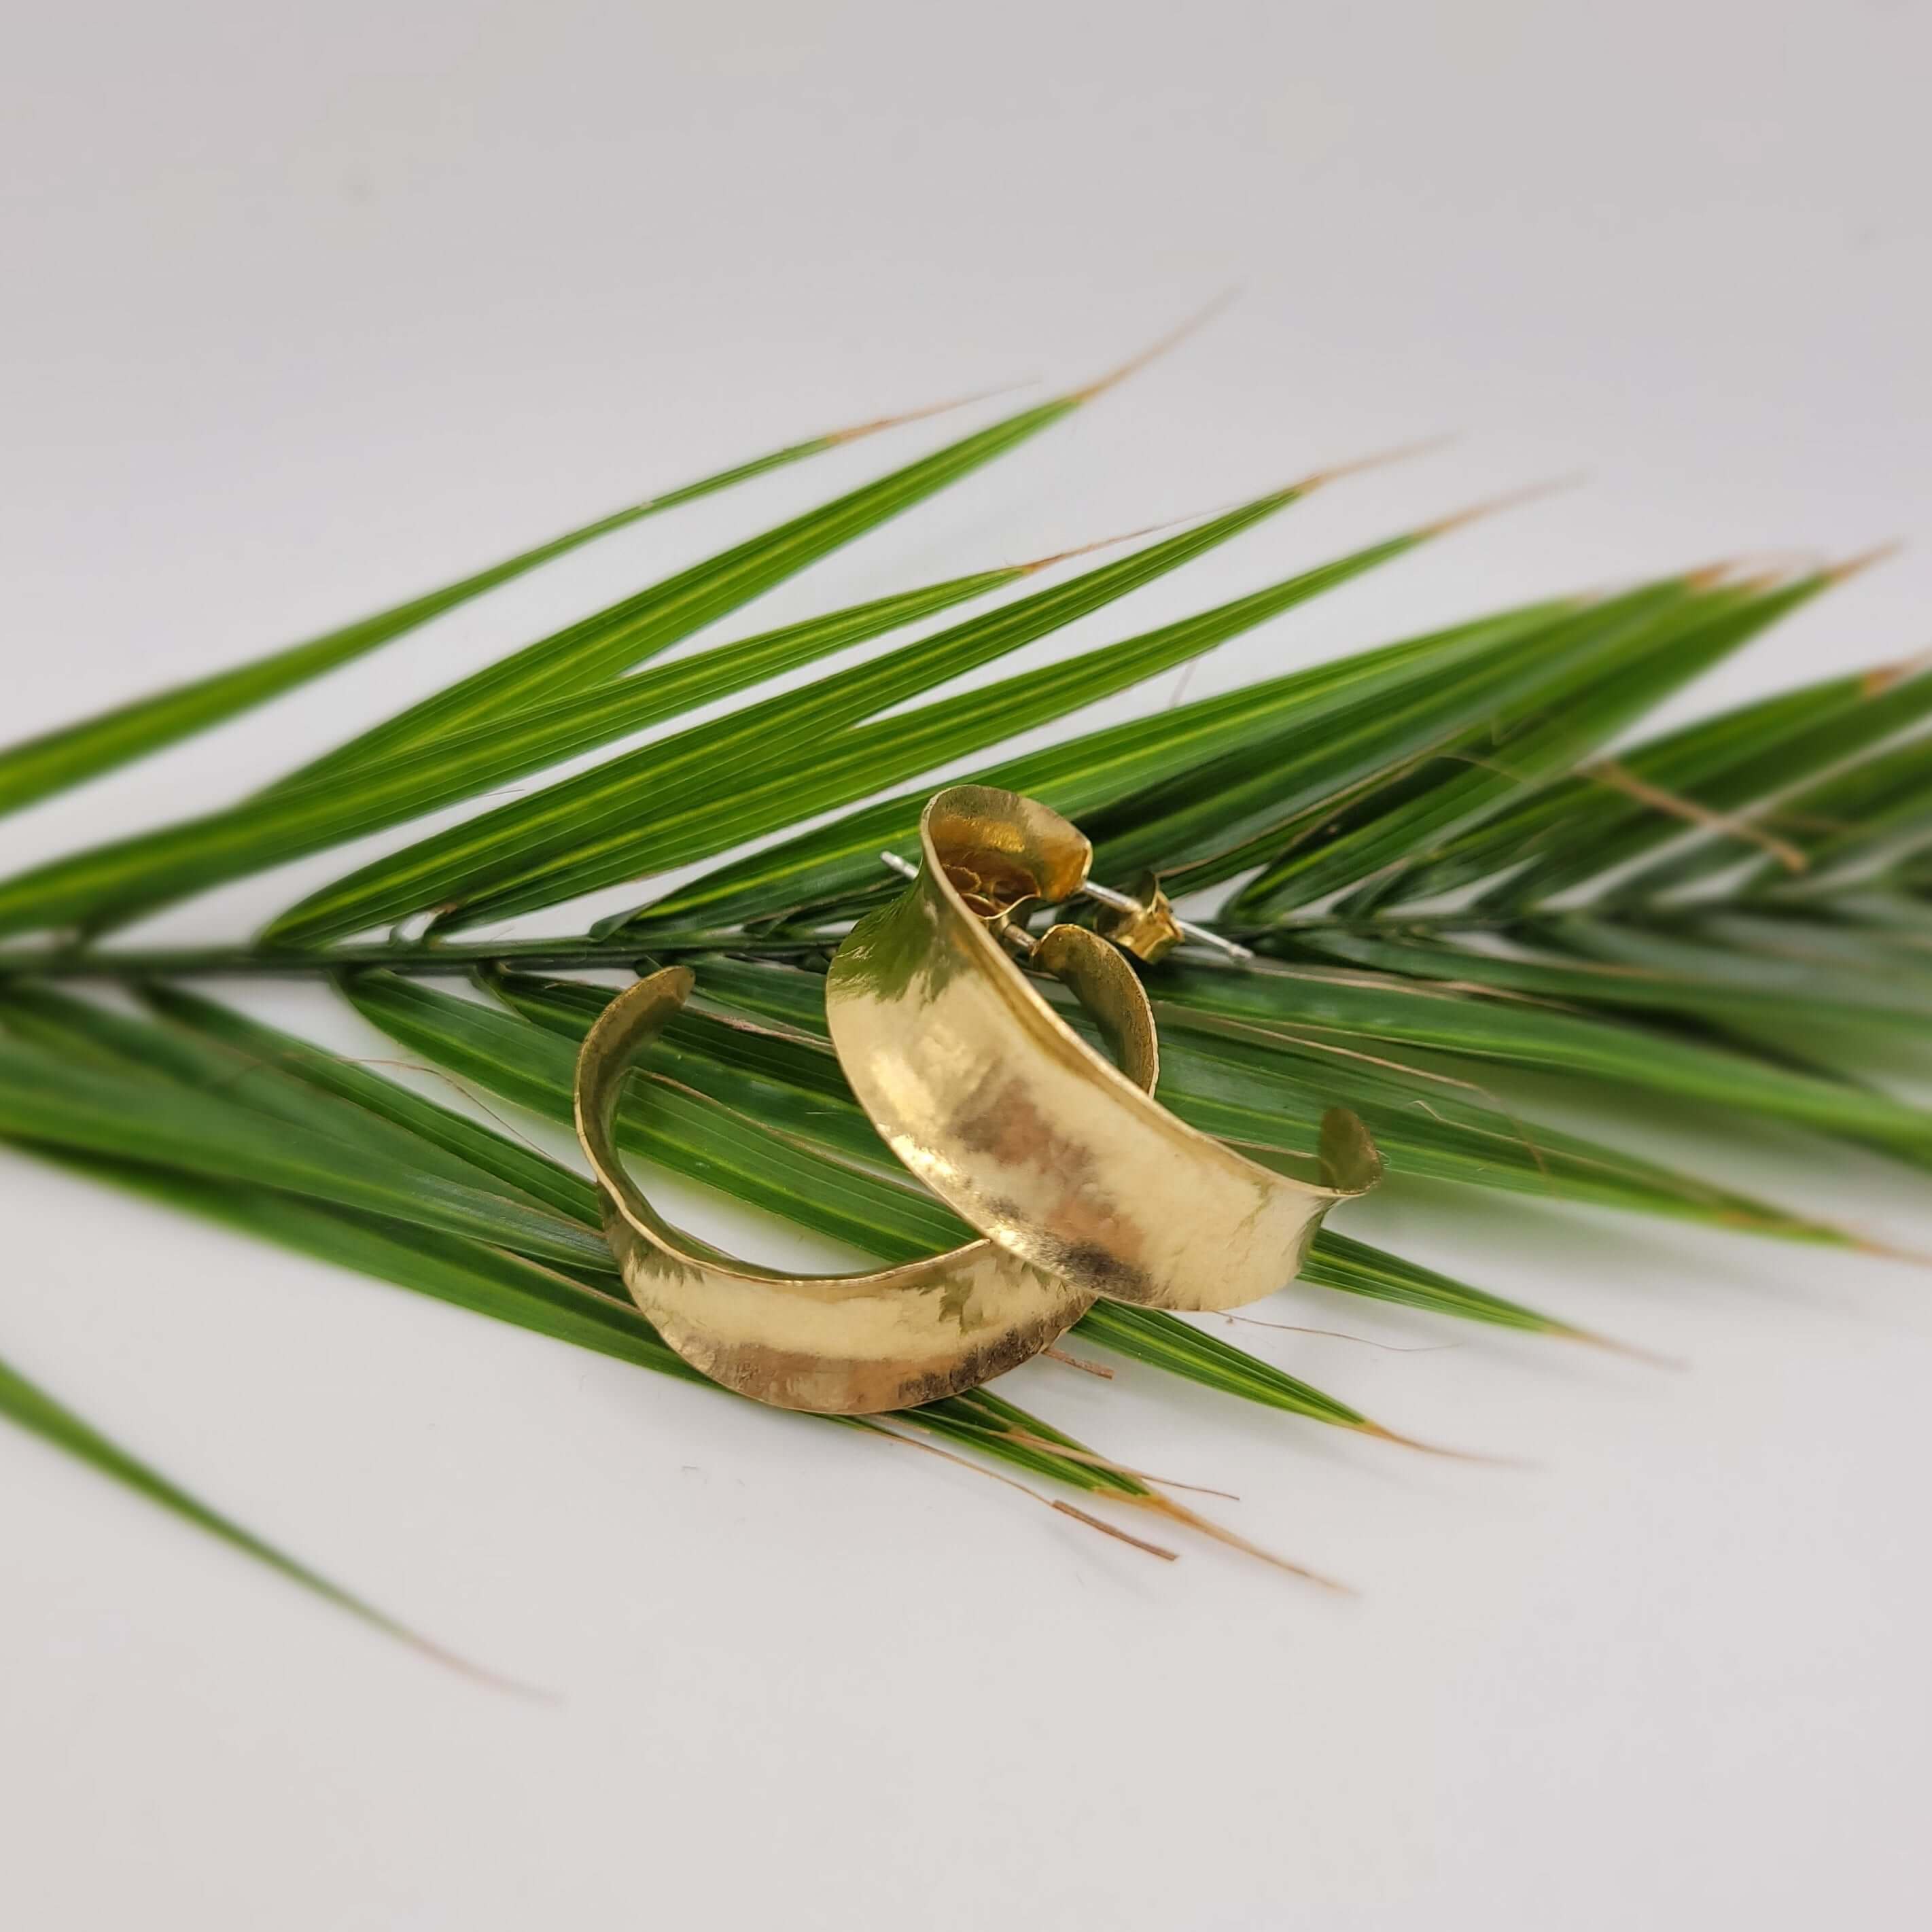 Tazara Brass Hoop Earrings on palm leaf